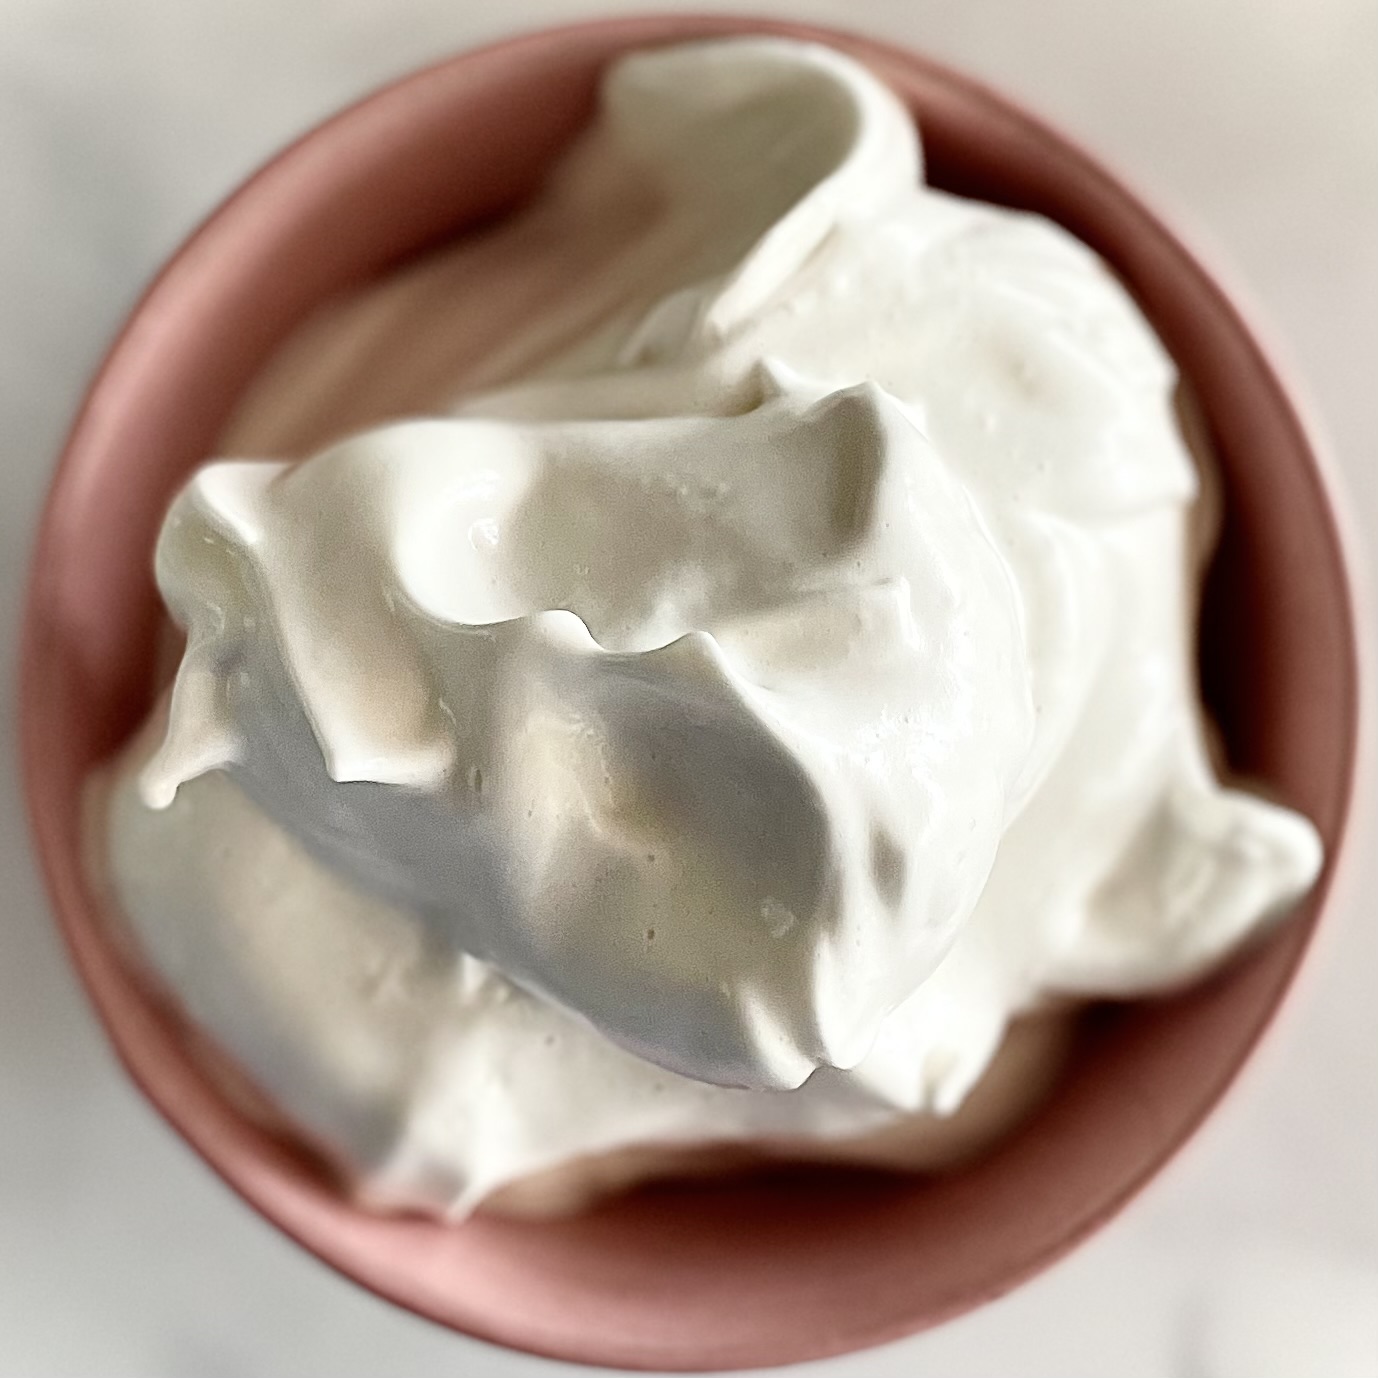 vanilla aquafaba whipped cream in a pink bowl